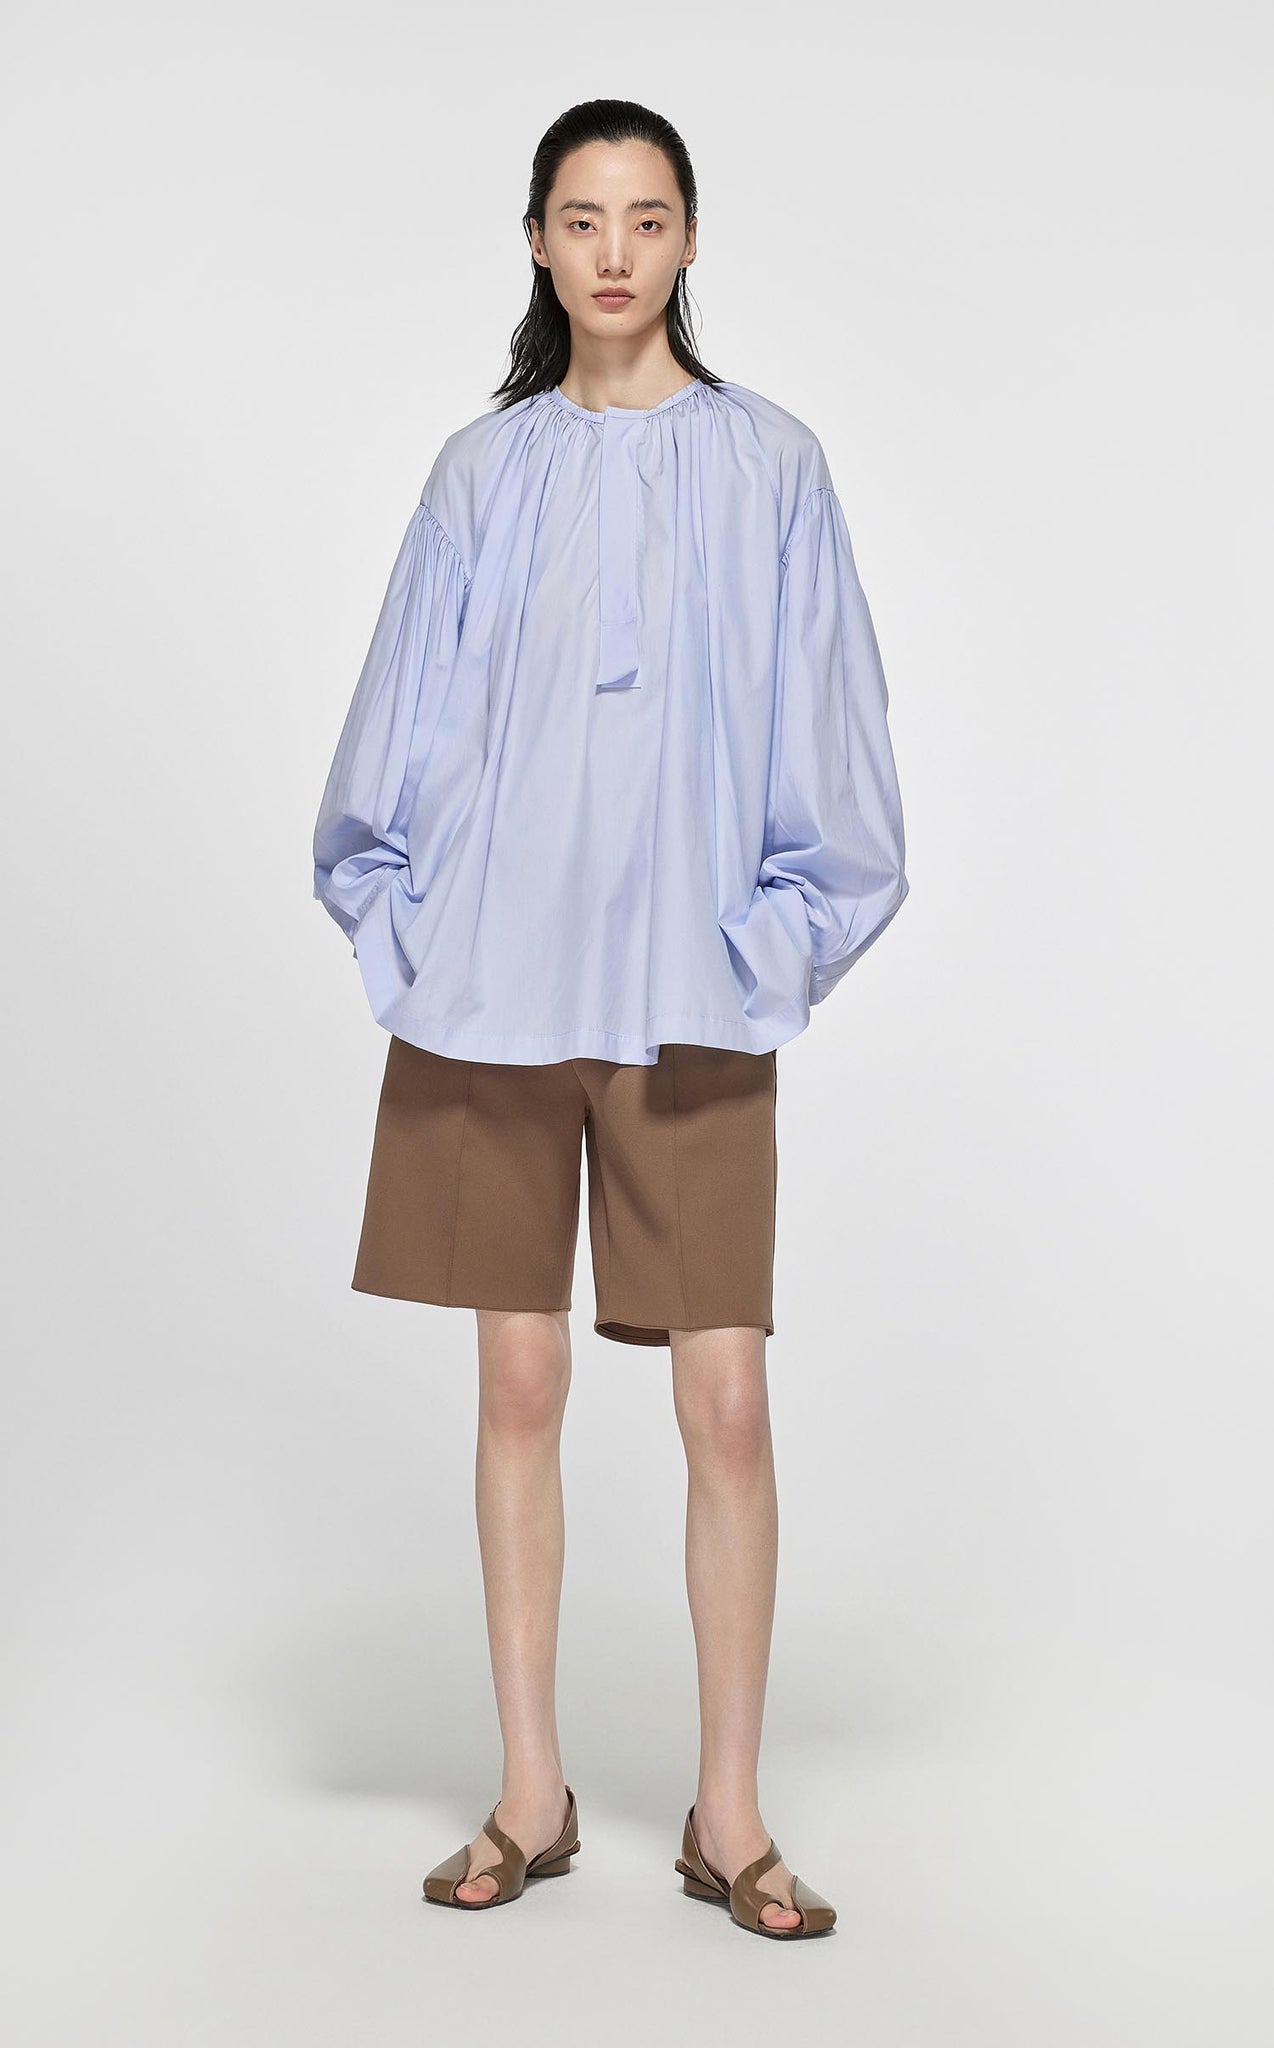 Shirts / JNBY Oversize Crewneck A-Line Long Sleeve Top